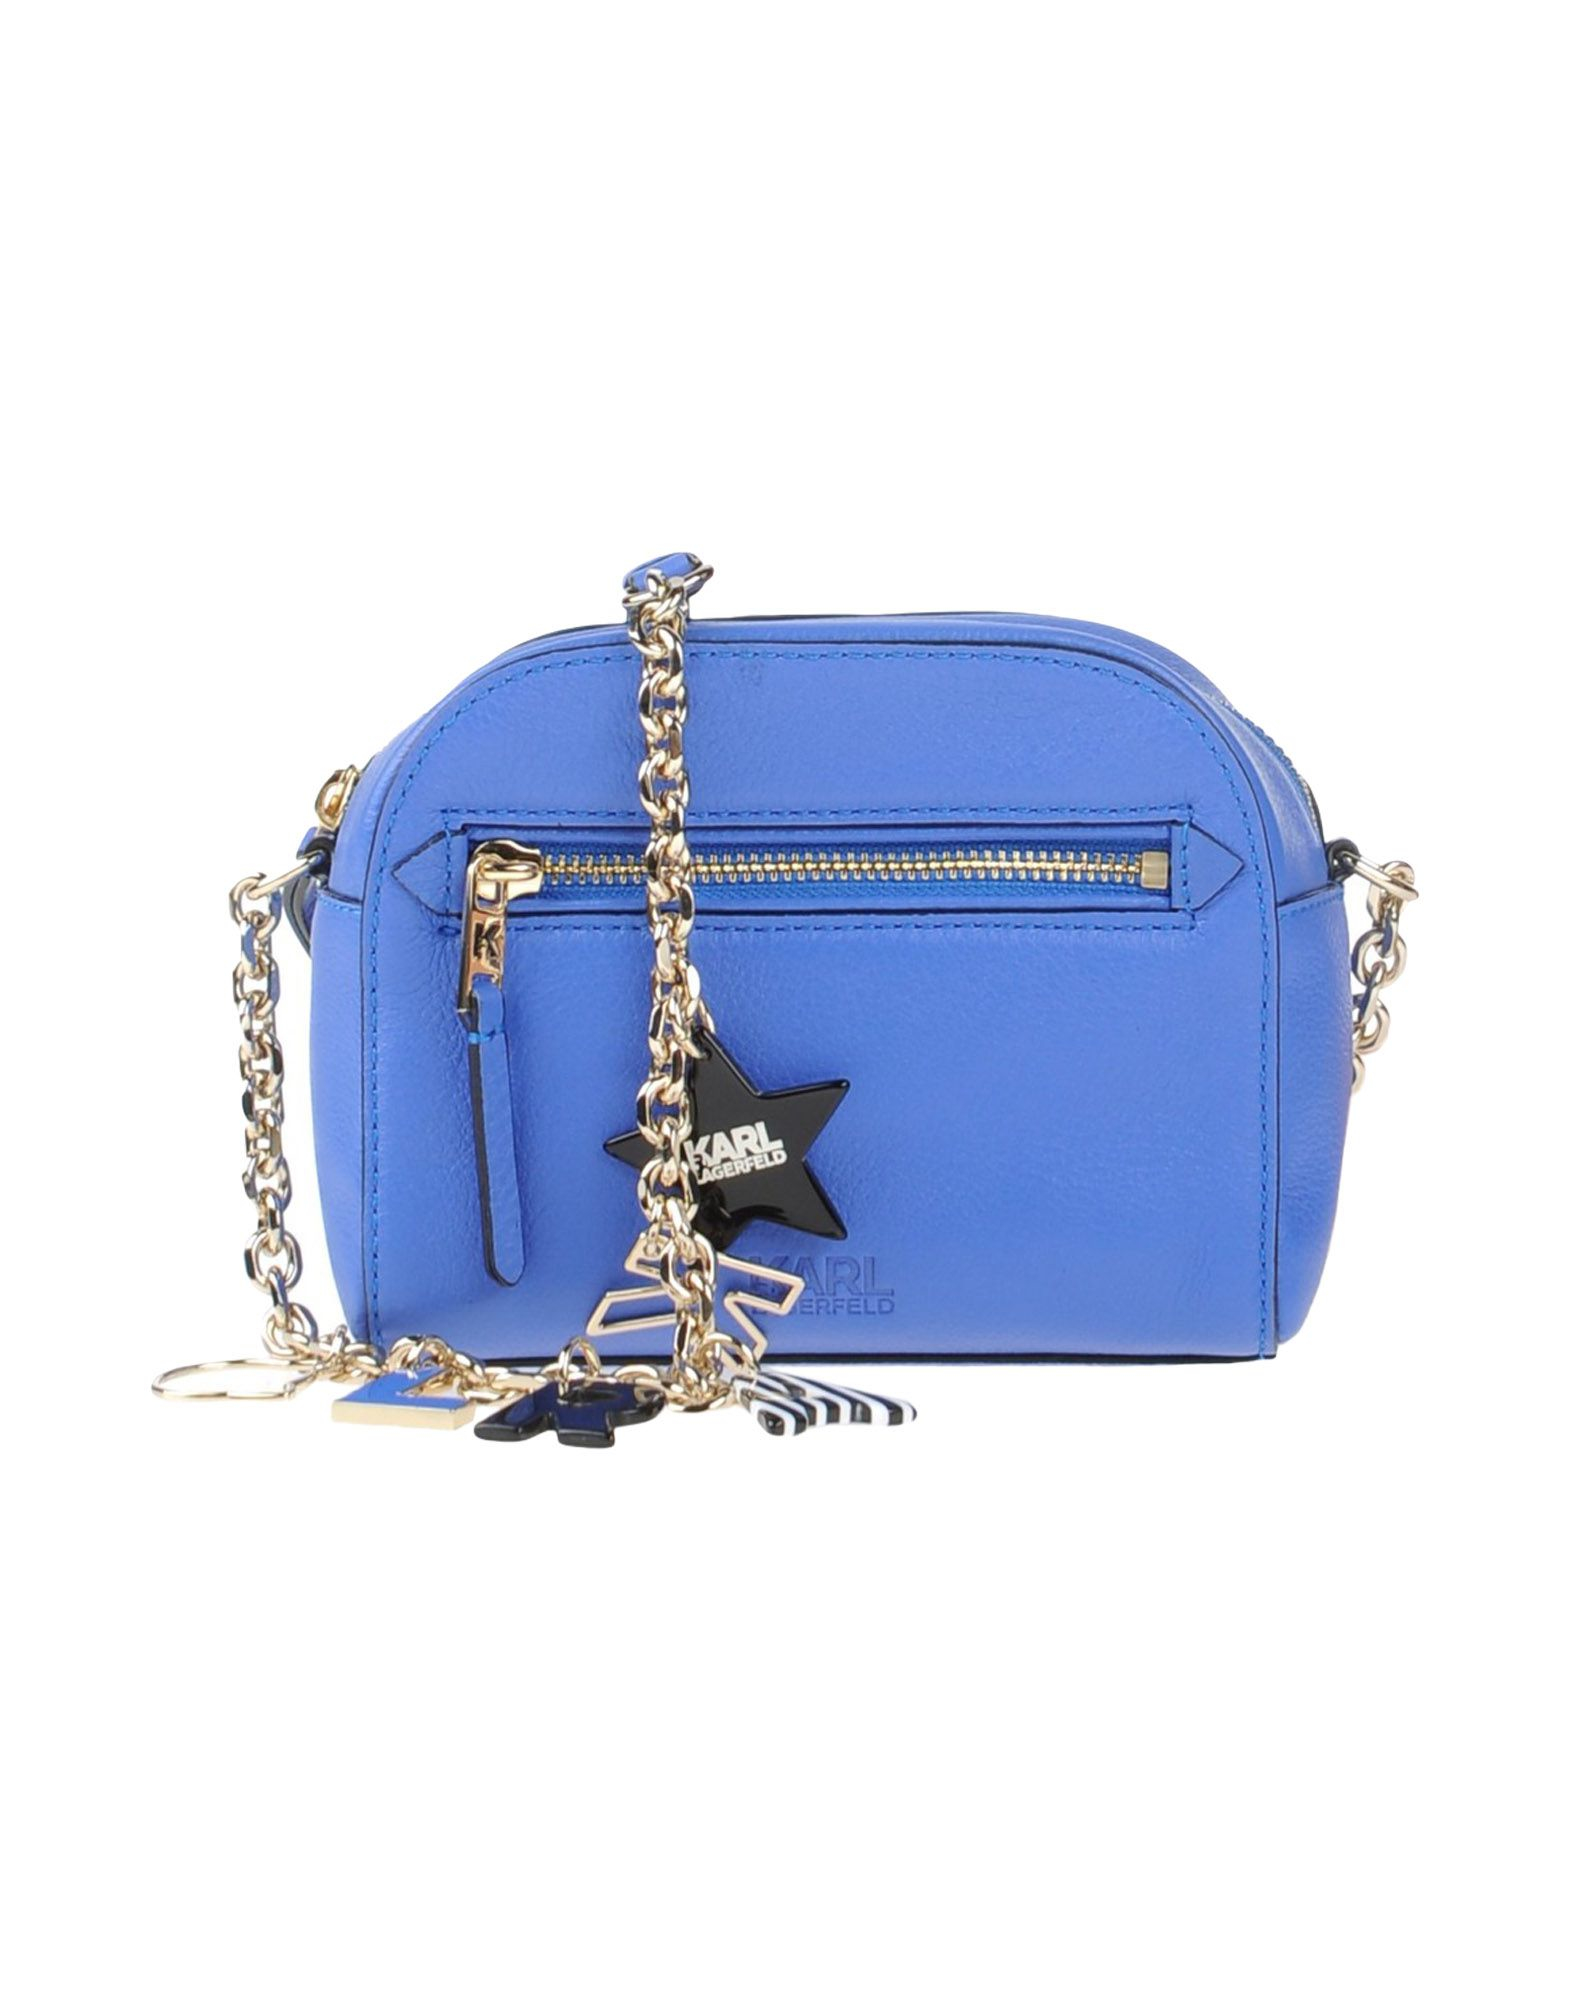 Karl lagerfeld Cross-body Bag in Blue (Bright blue) | Lyst